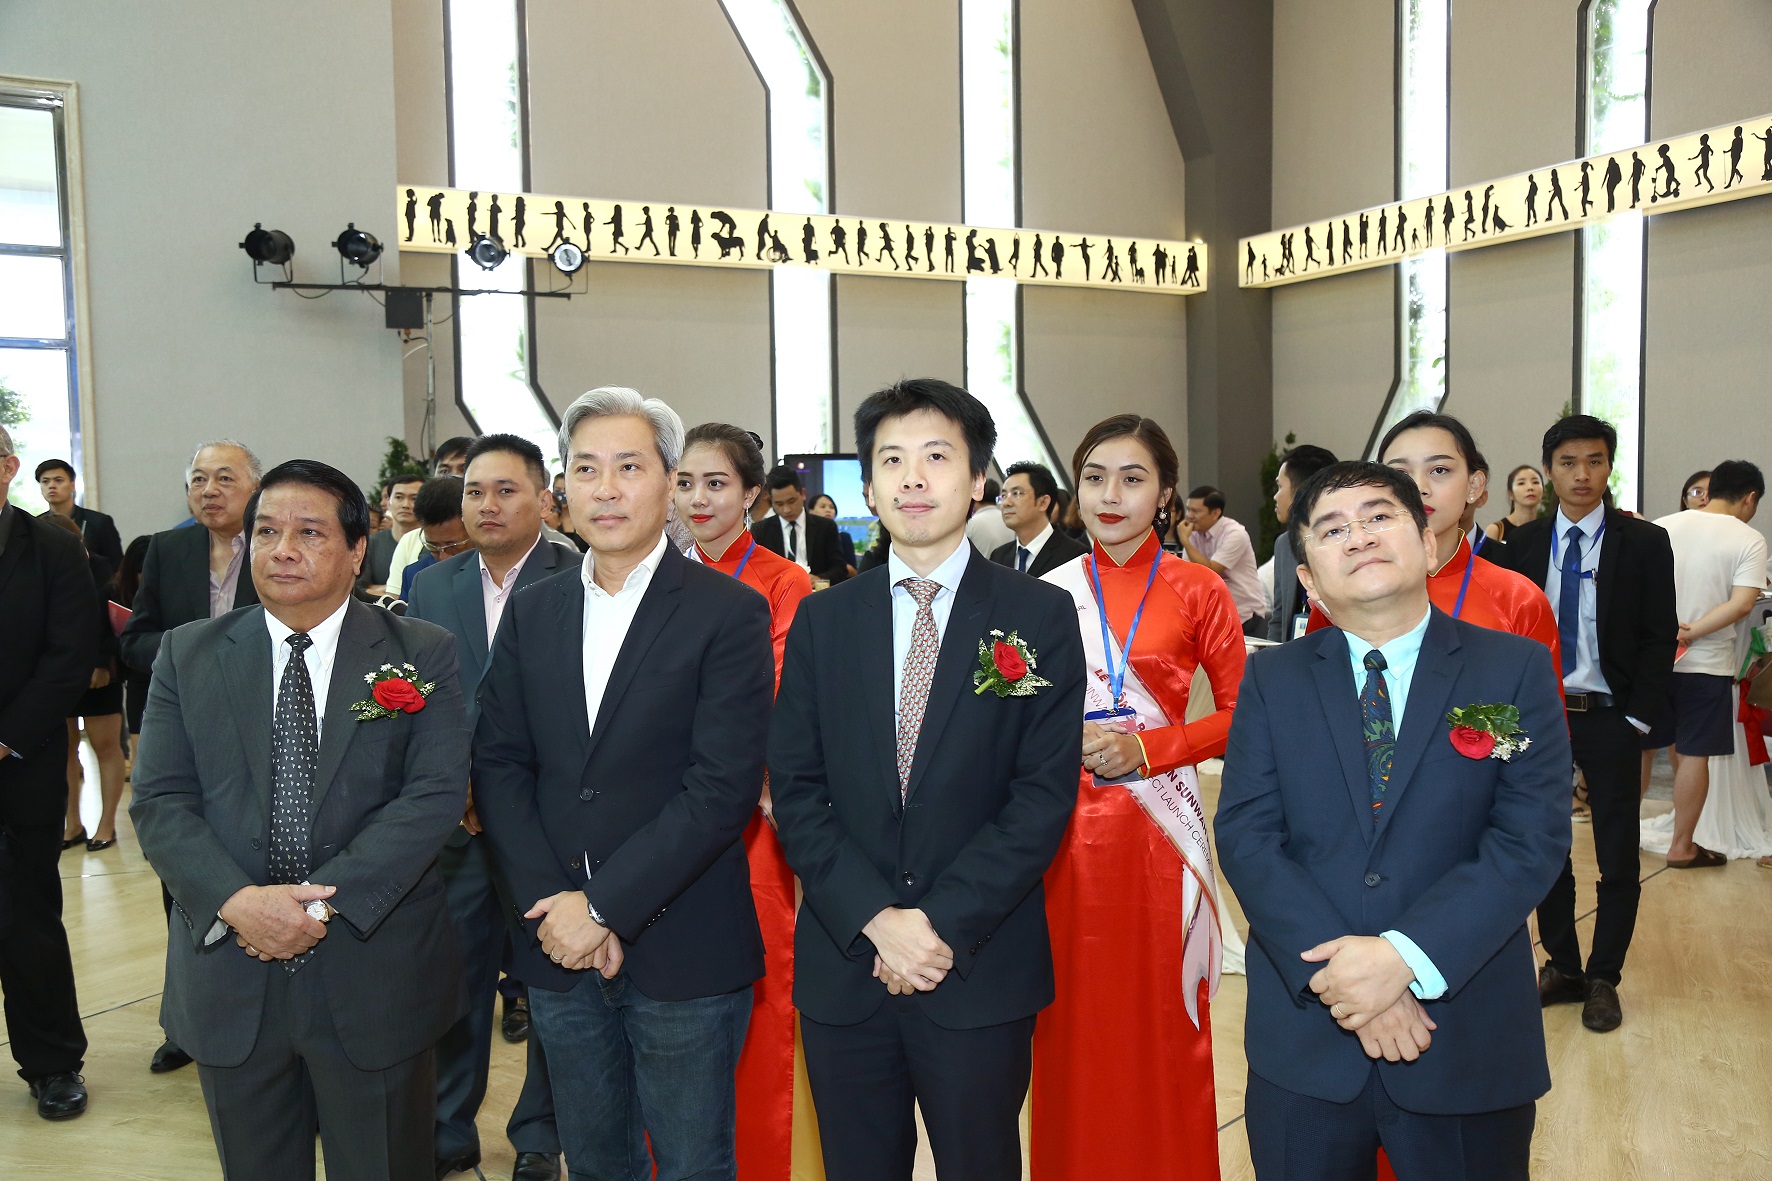 (from left to right) Mr Lo Kwok Luen, Mr Don Lam, Mr Johnson Choi & Mr Nguyen Van Len